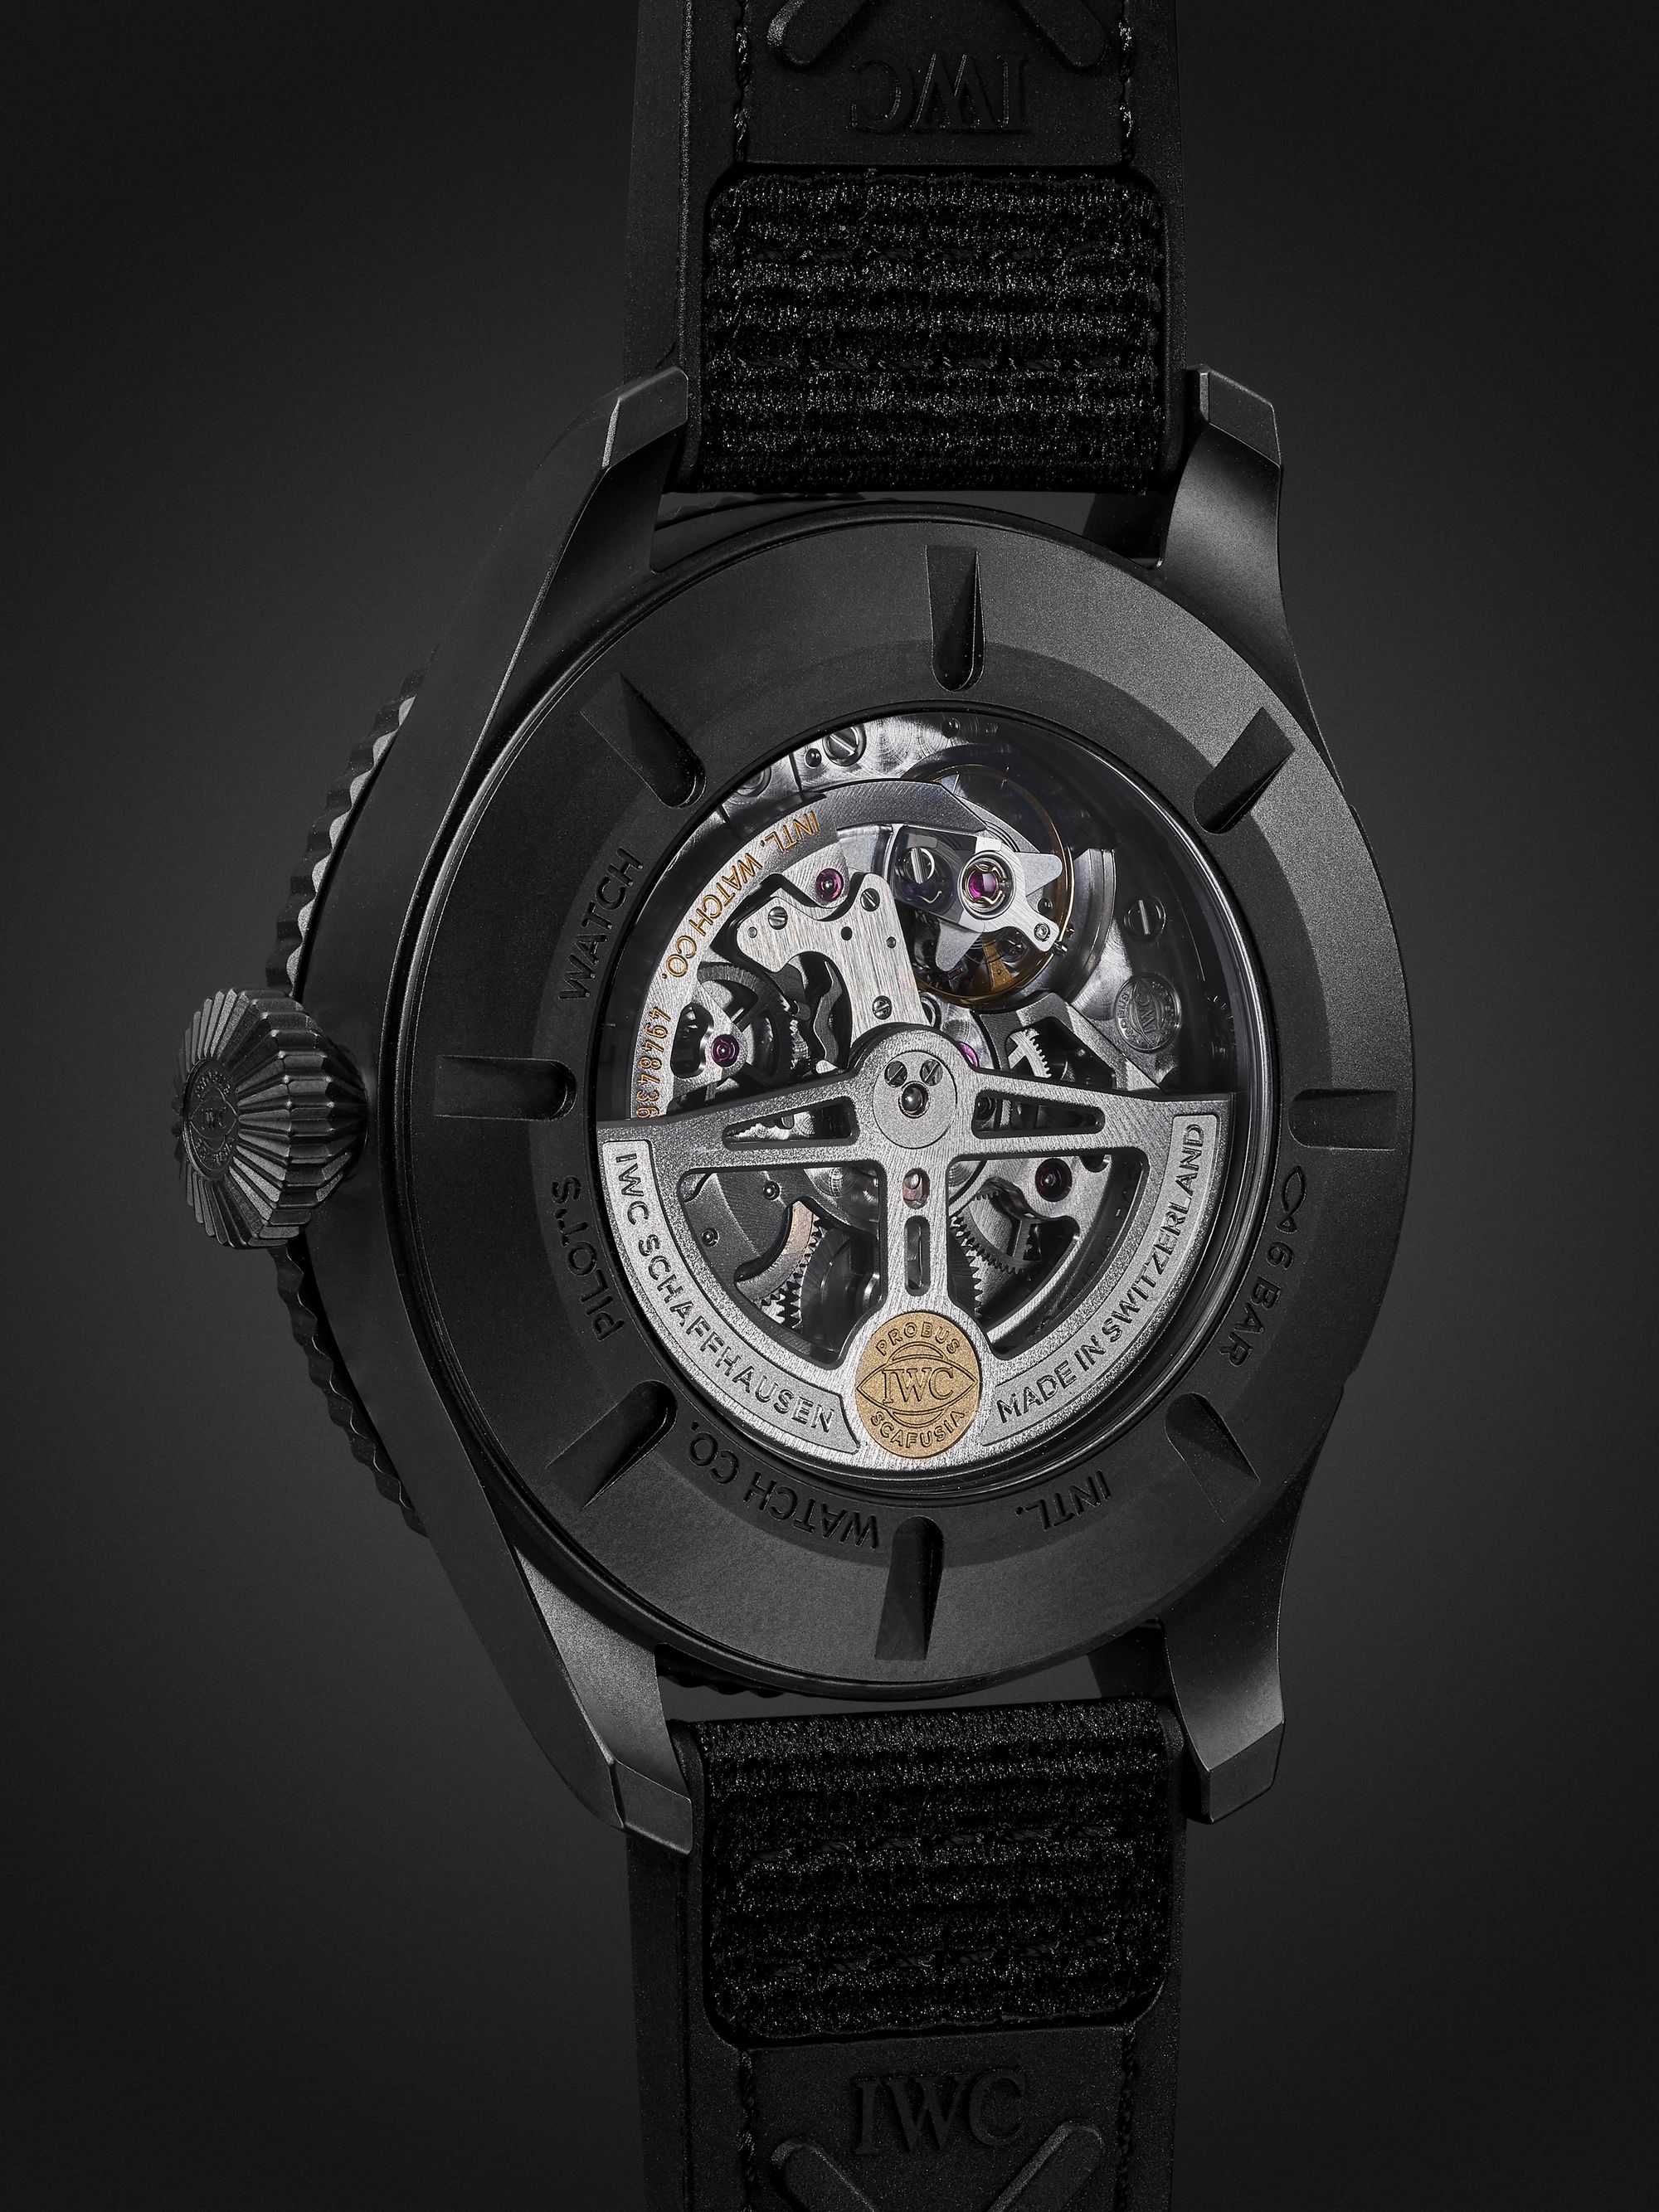 IWC SCHAFFHAUSEN Pilot's Watch Timezoner TOP GUN Limited Edition Automatic Ceratanium and Webbing Watch, Ref. No. IW395505